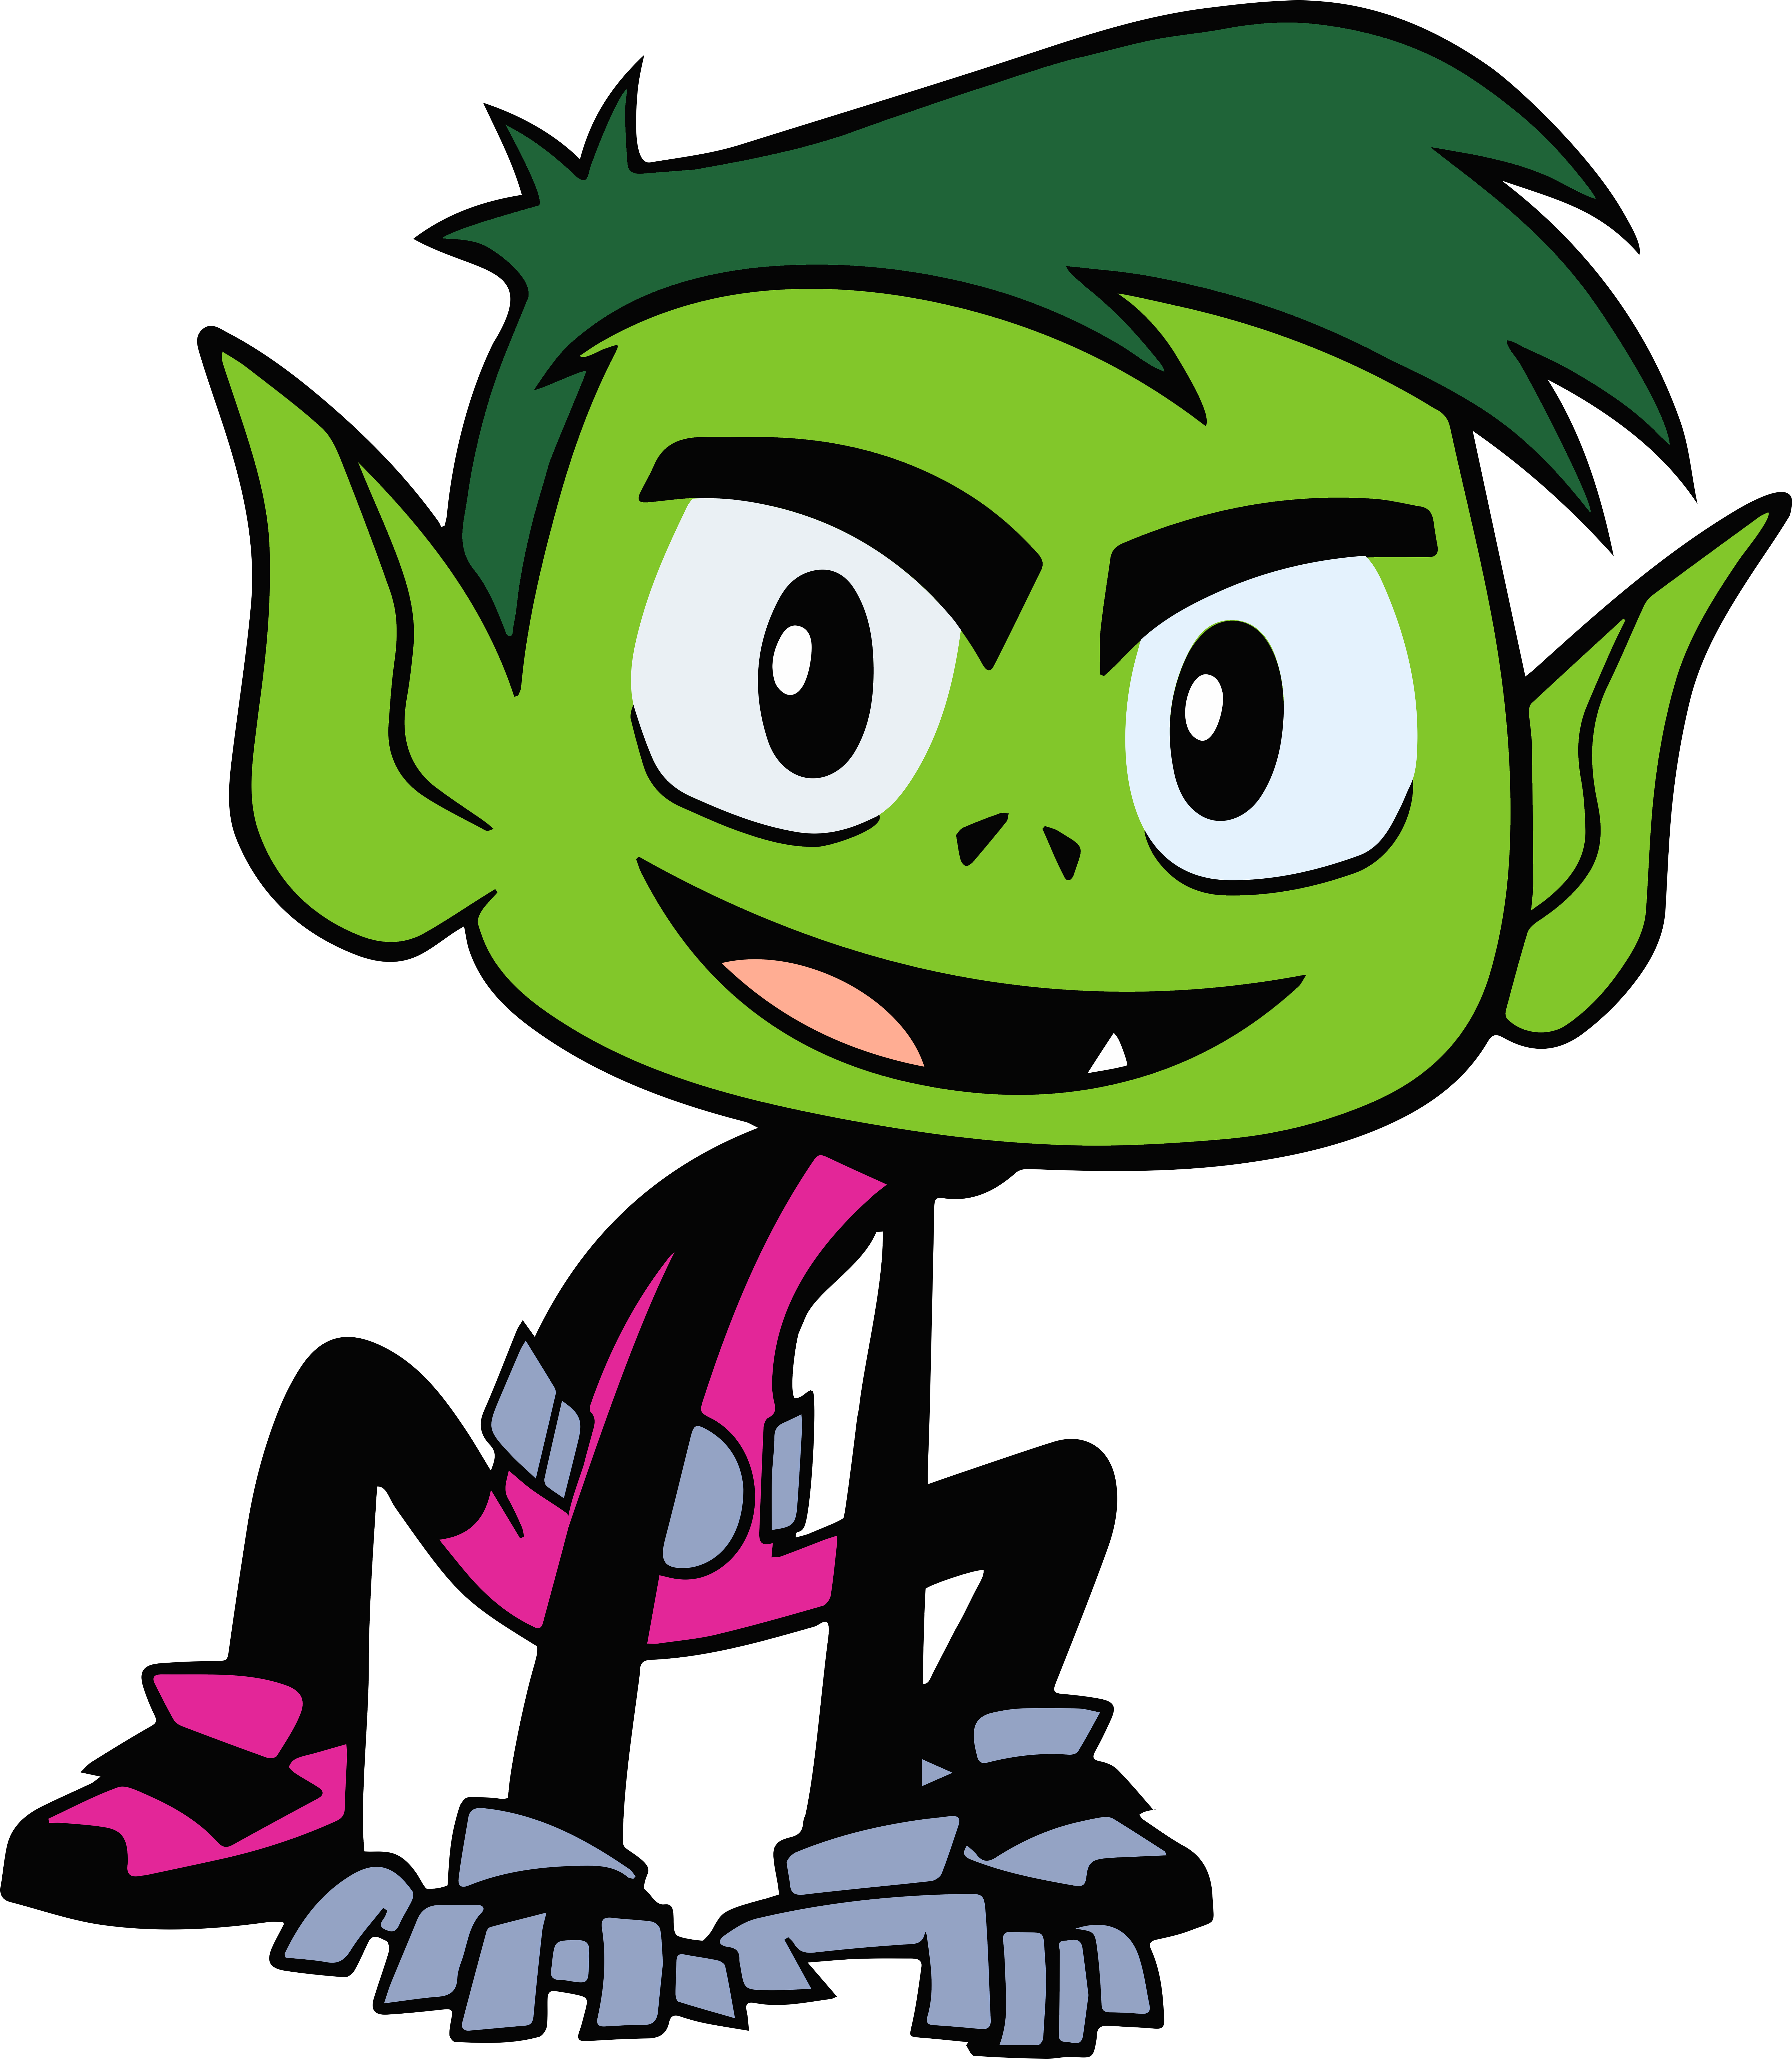 Cartoon Green Cartoon Character With Green Hair And Green Ears